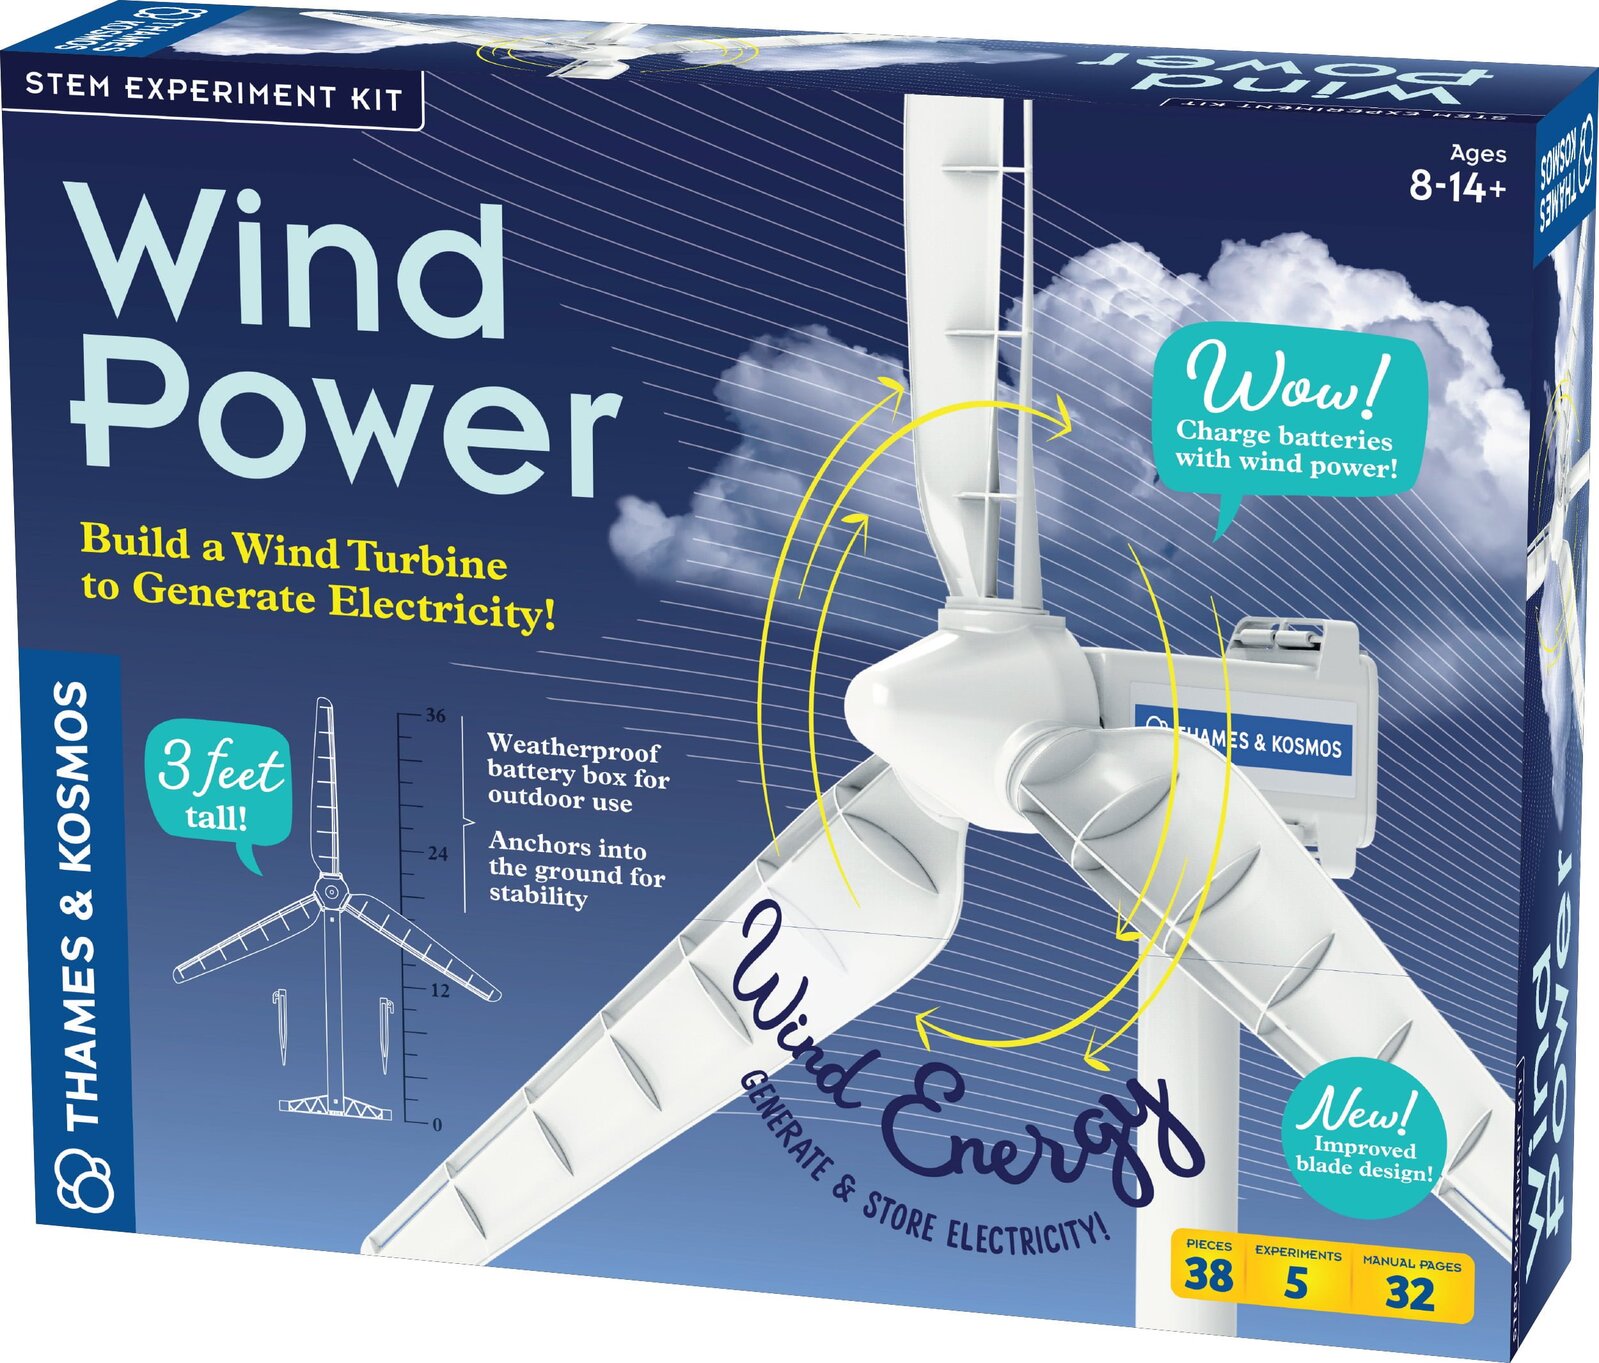 Wind Power Stem Experiment Kit image